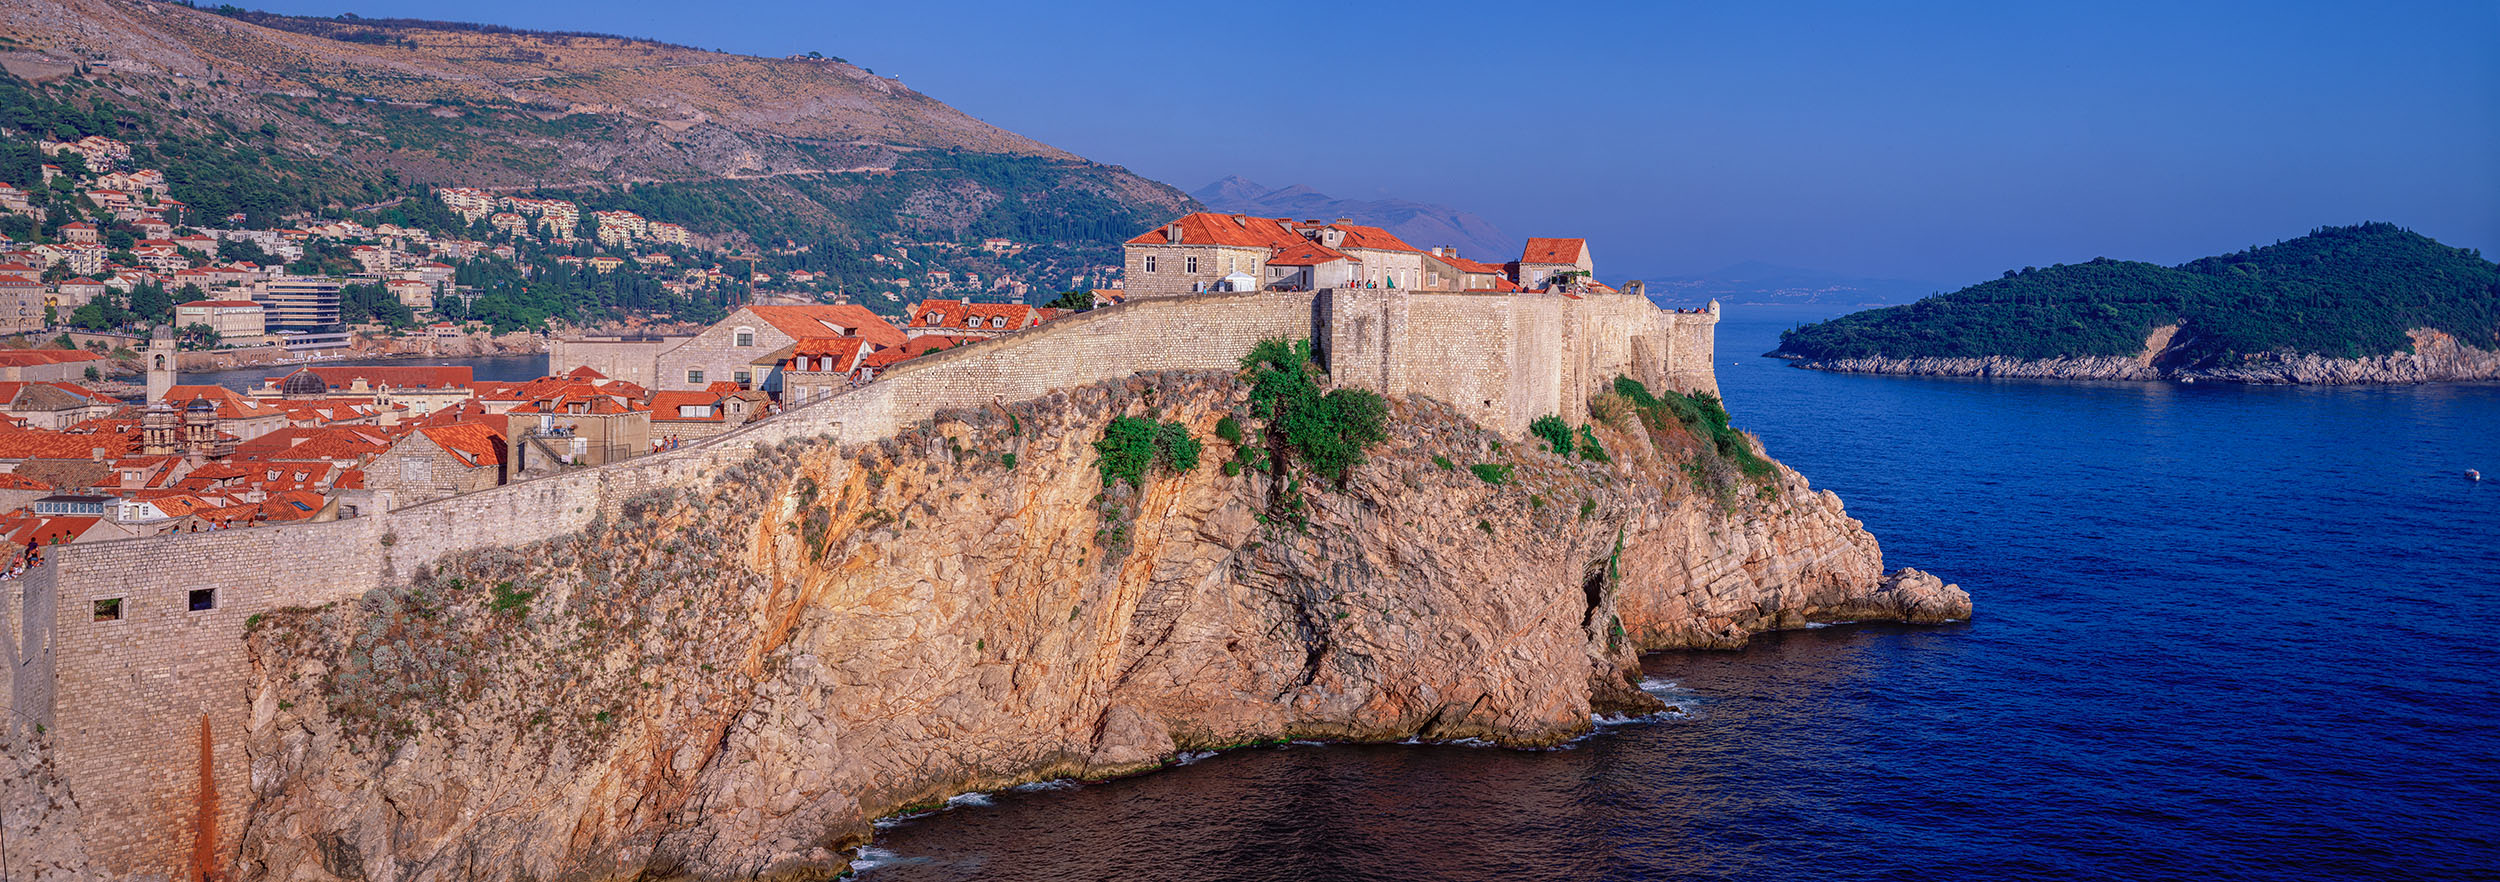 "Dubrovnik's Coastal Splendor" presents a captivating horizontal view of the ancient medieval village of Dubrovnik, Croatia...